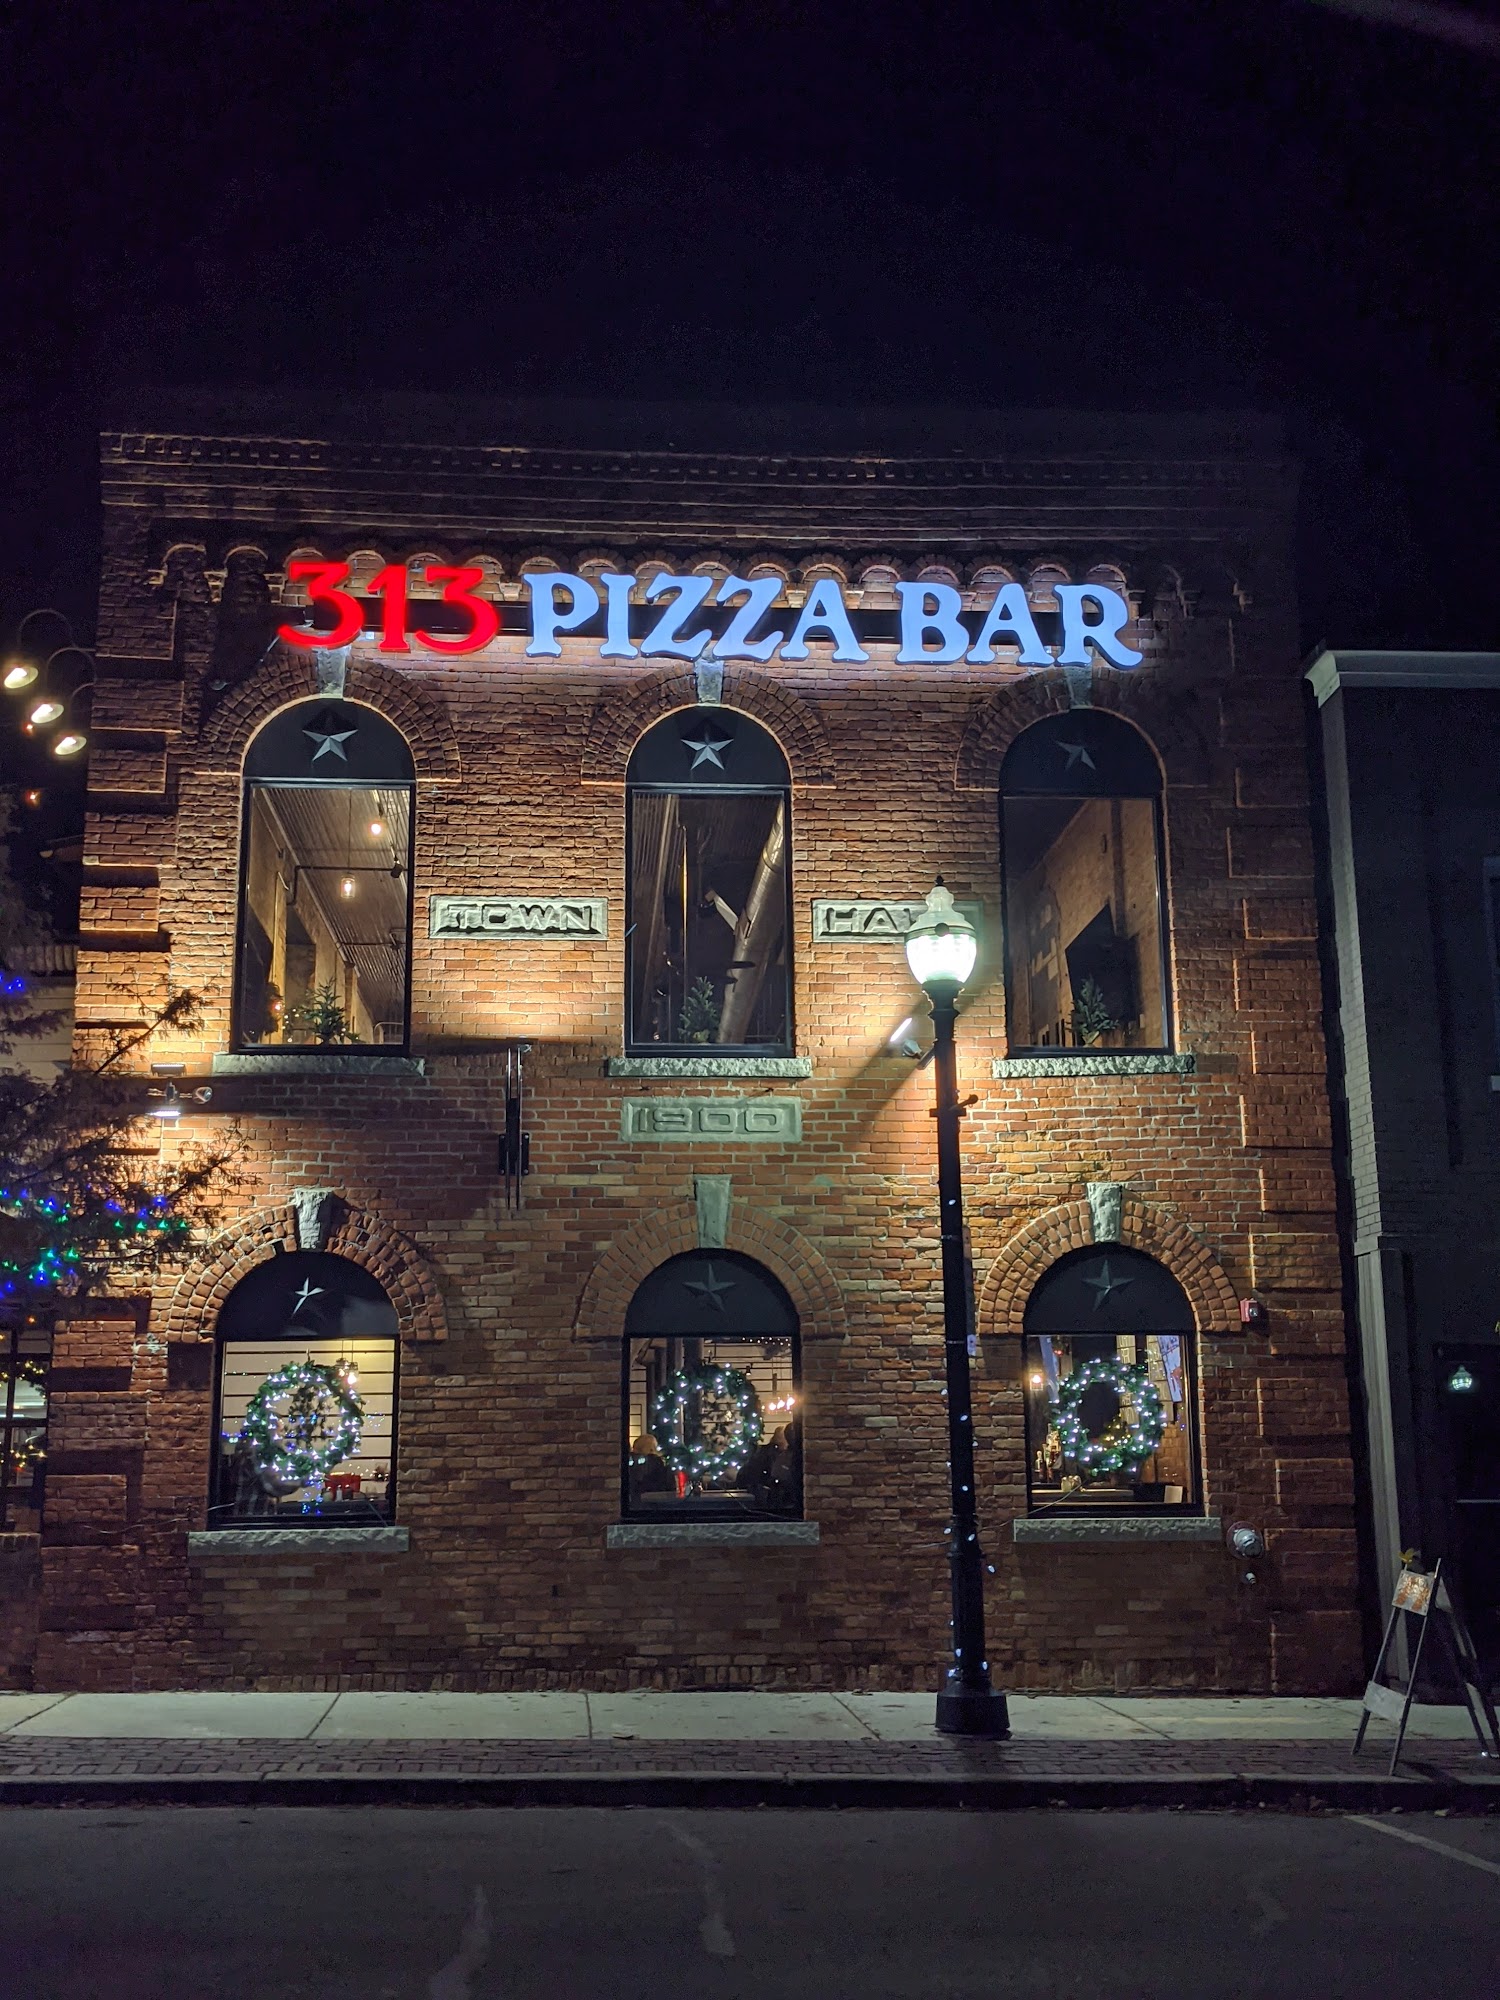 313 Pizza Bar